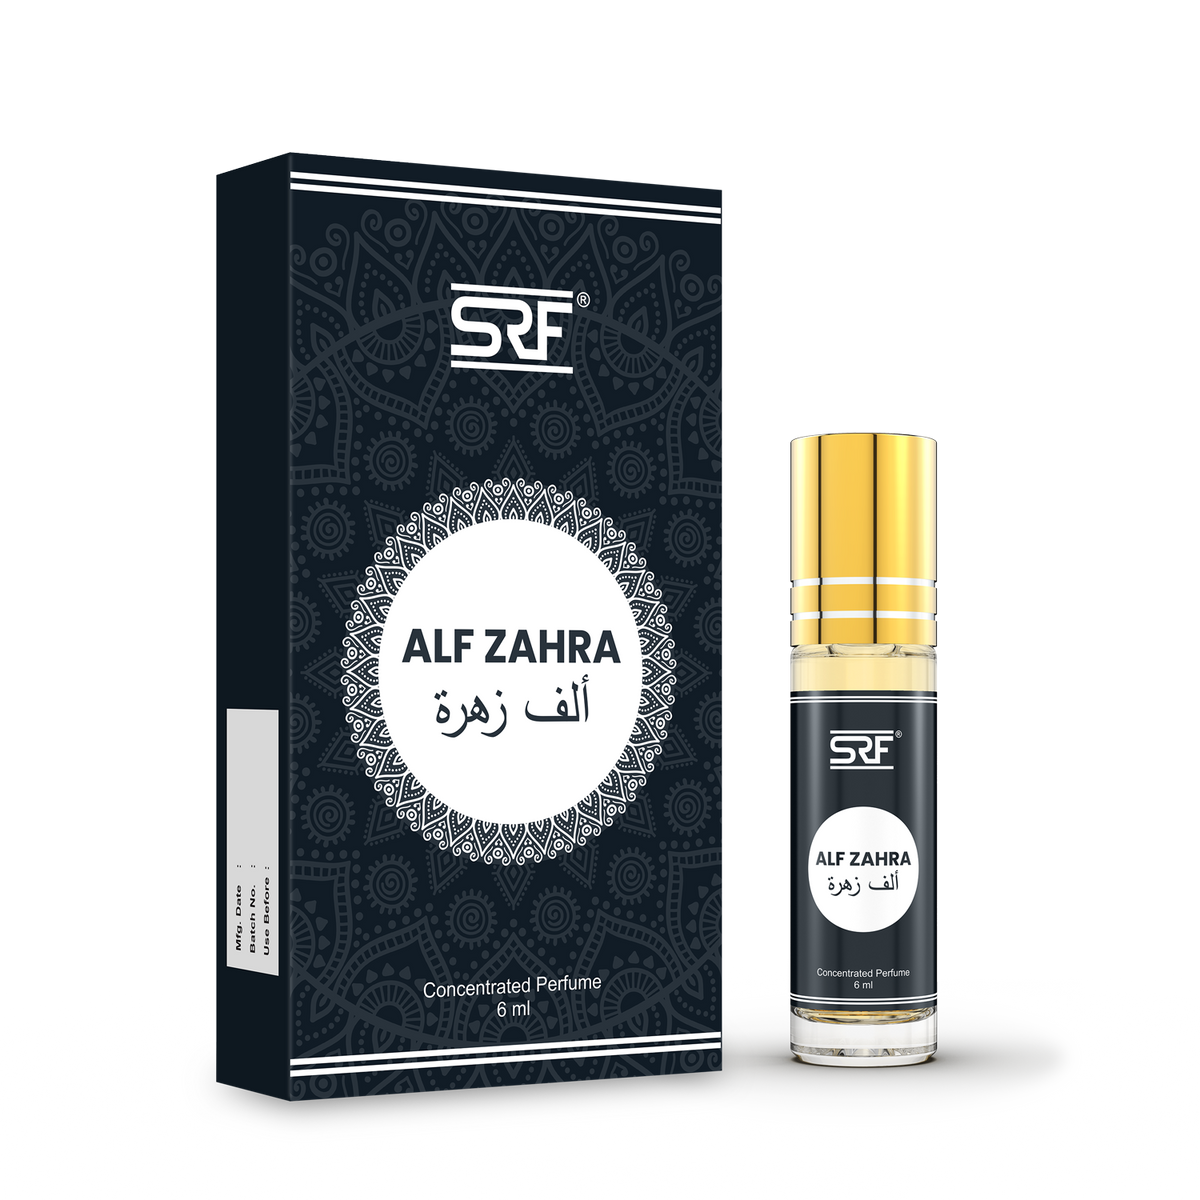 Alf Zahra Concentrated Perfume Oil